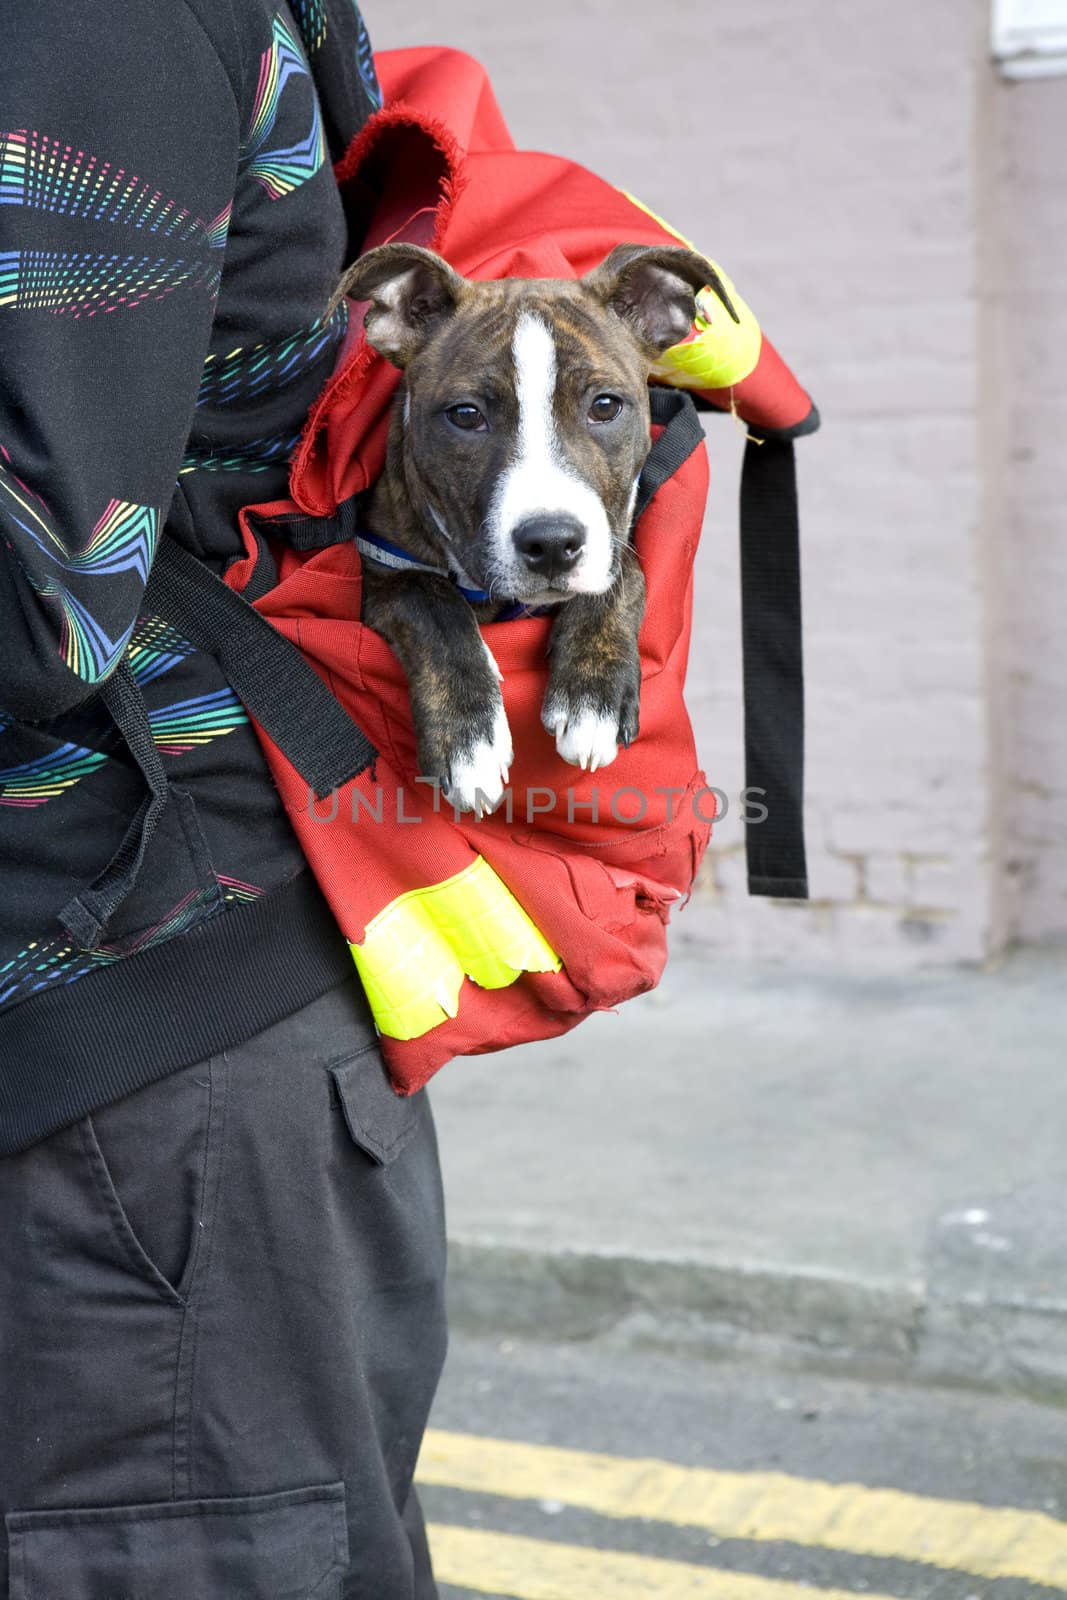 little cute puppy dog in bag. by elenarostunova